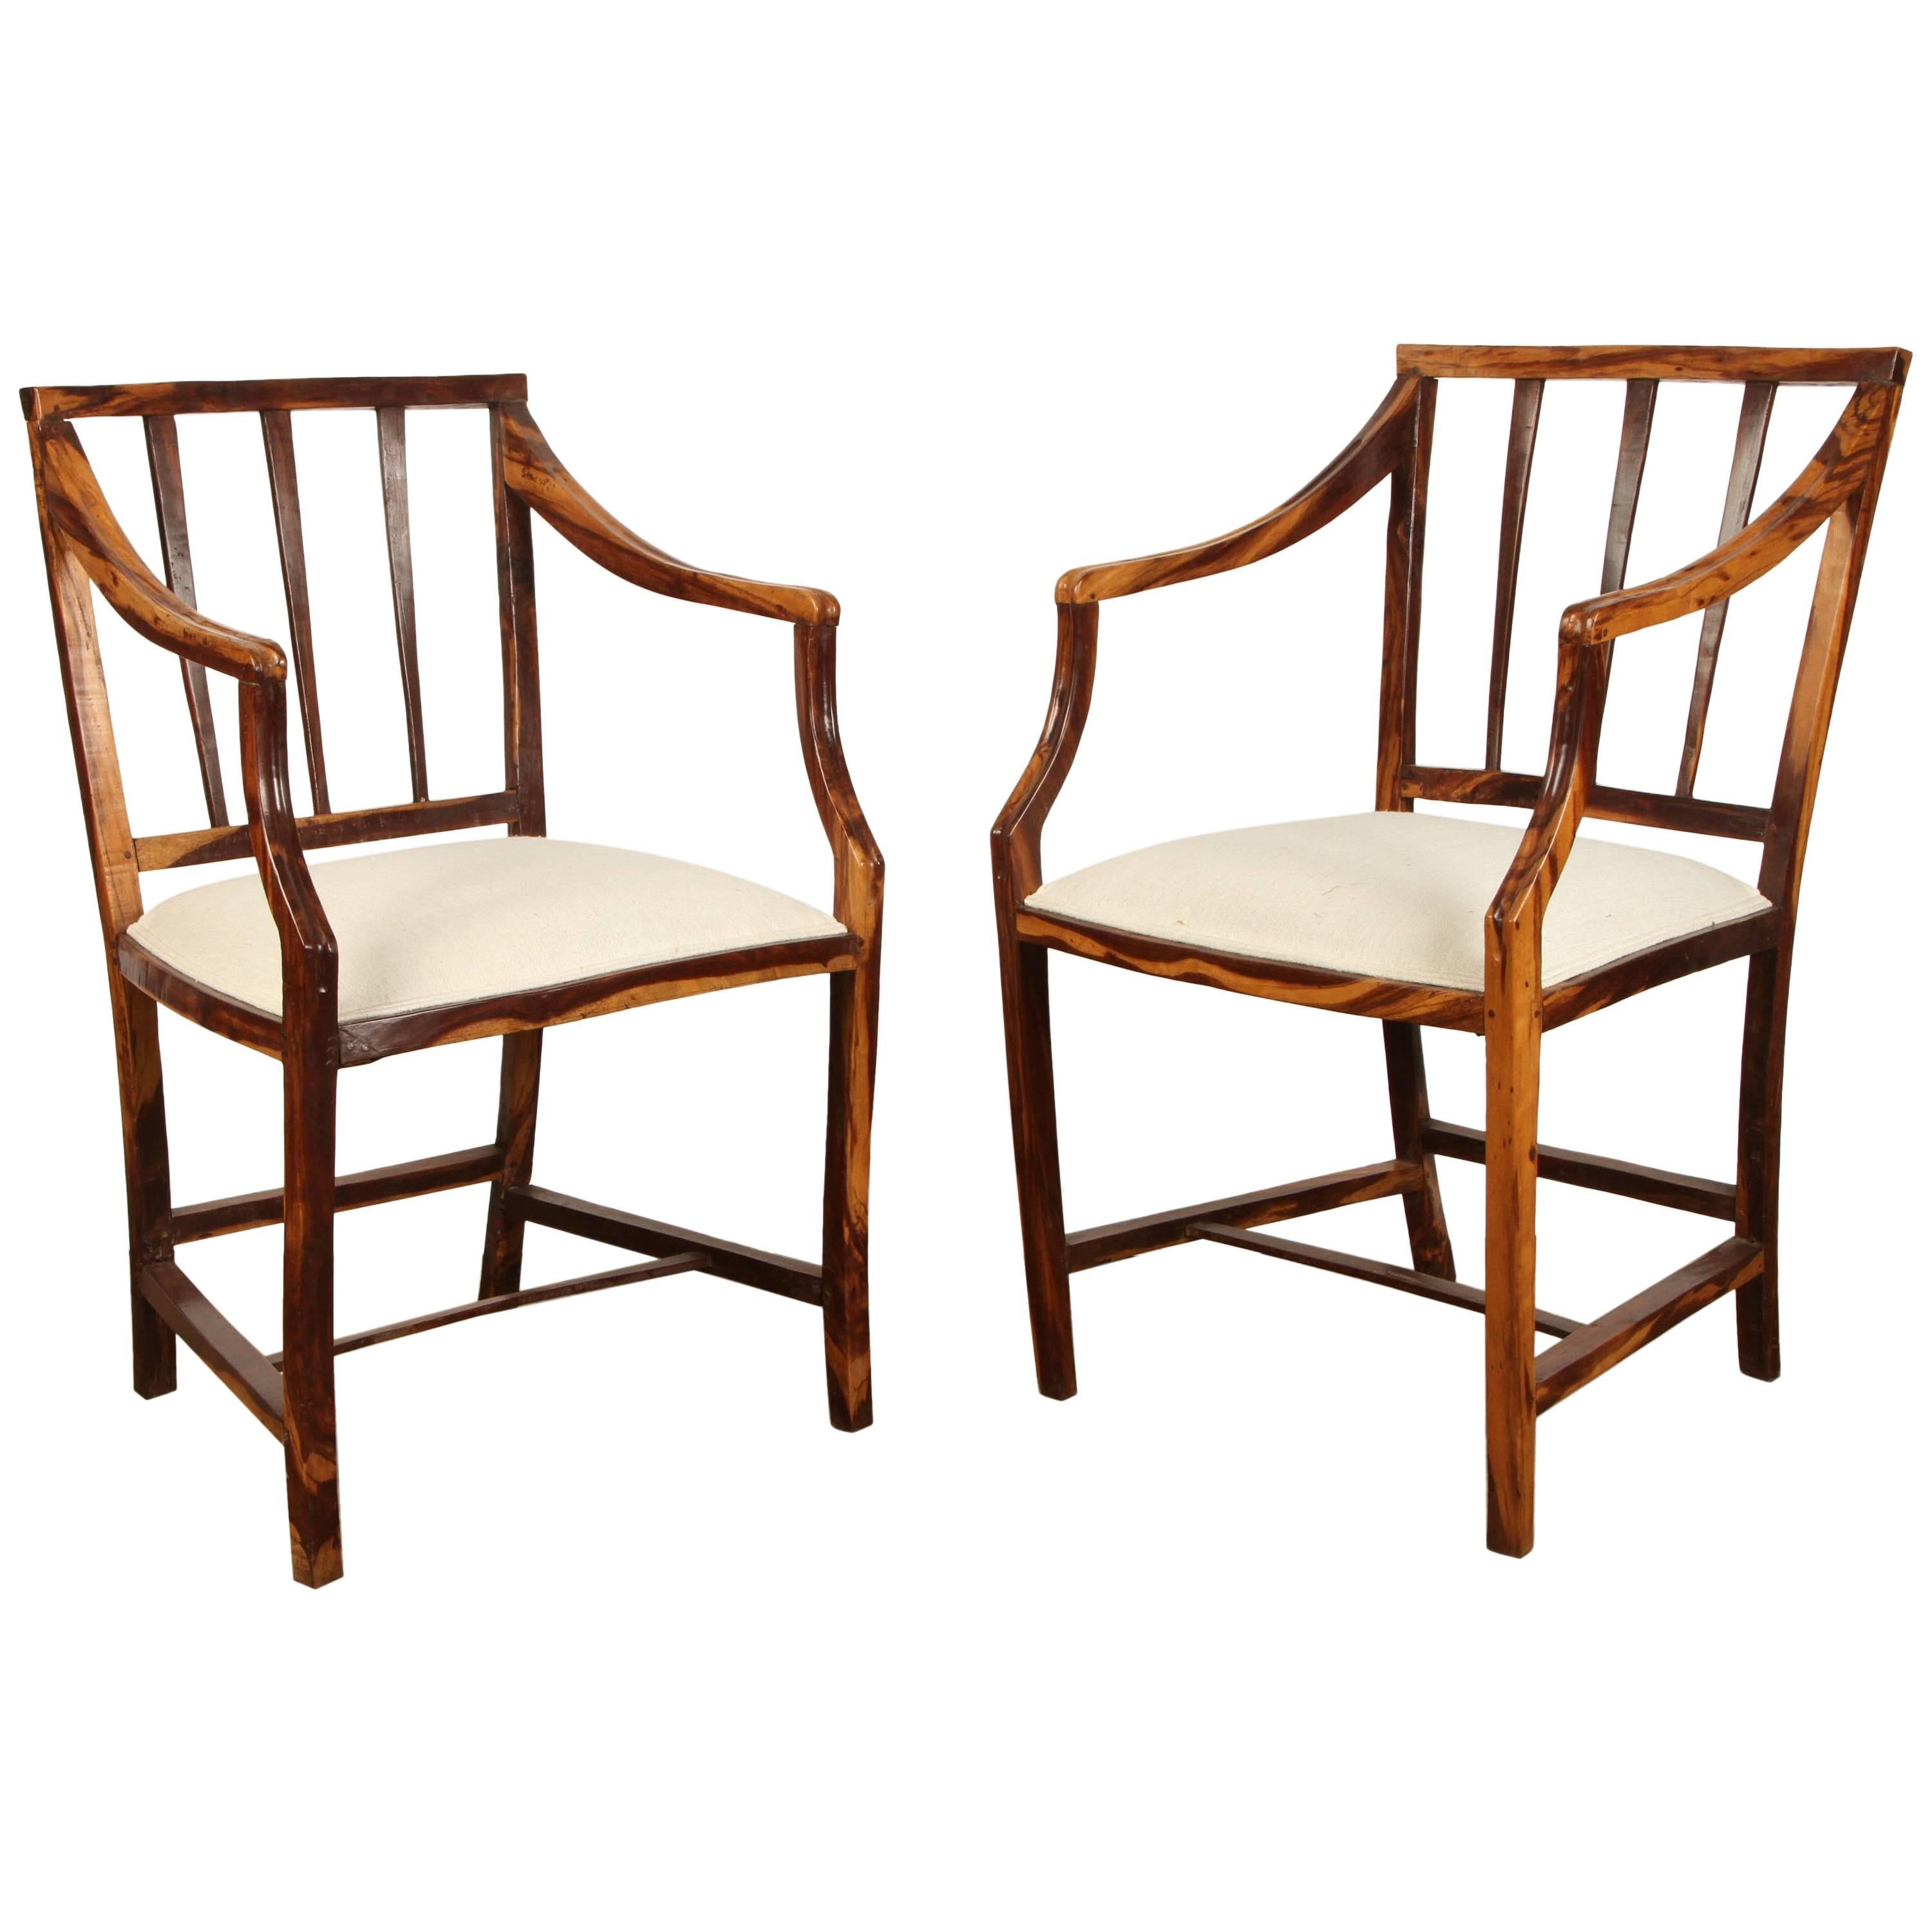 Rare Pair of Calamander Colonial Arm Chairs